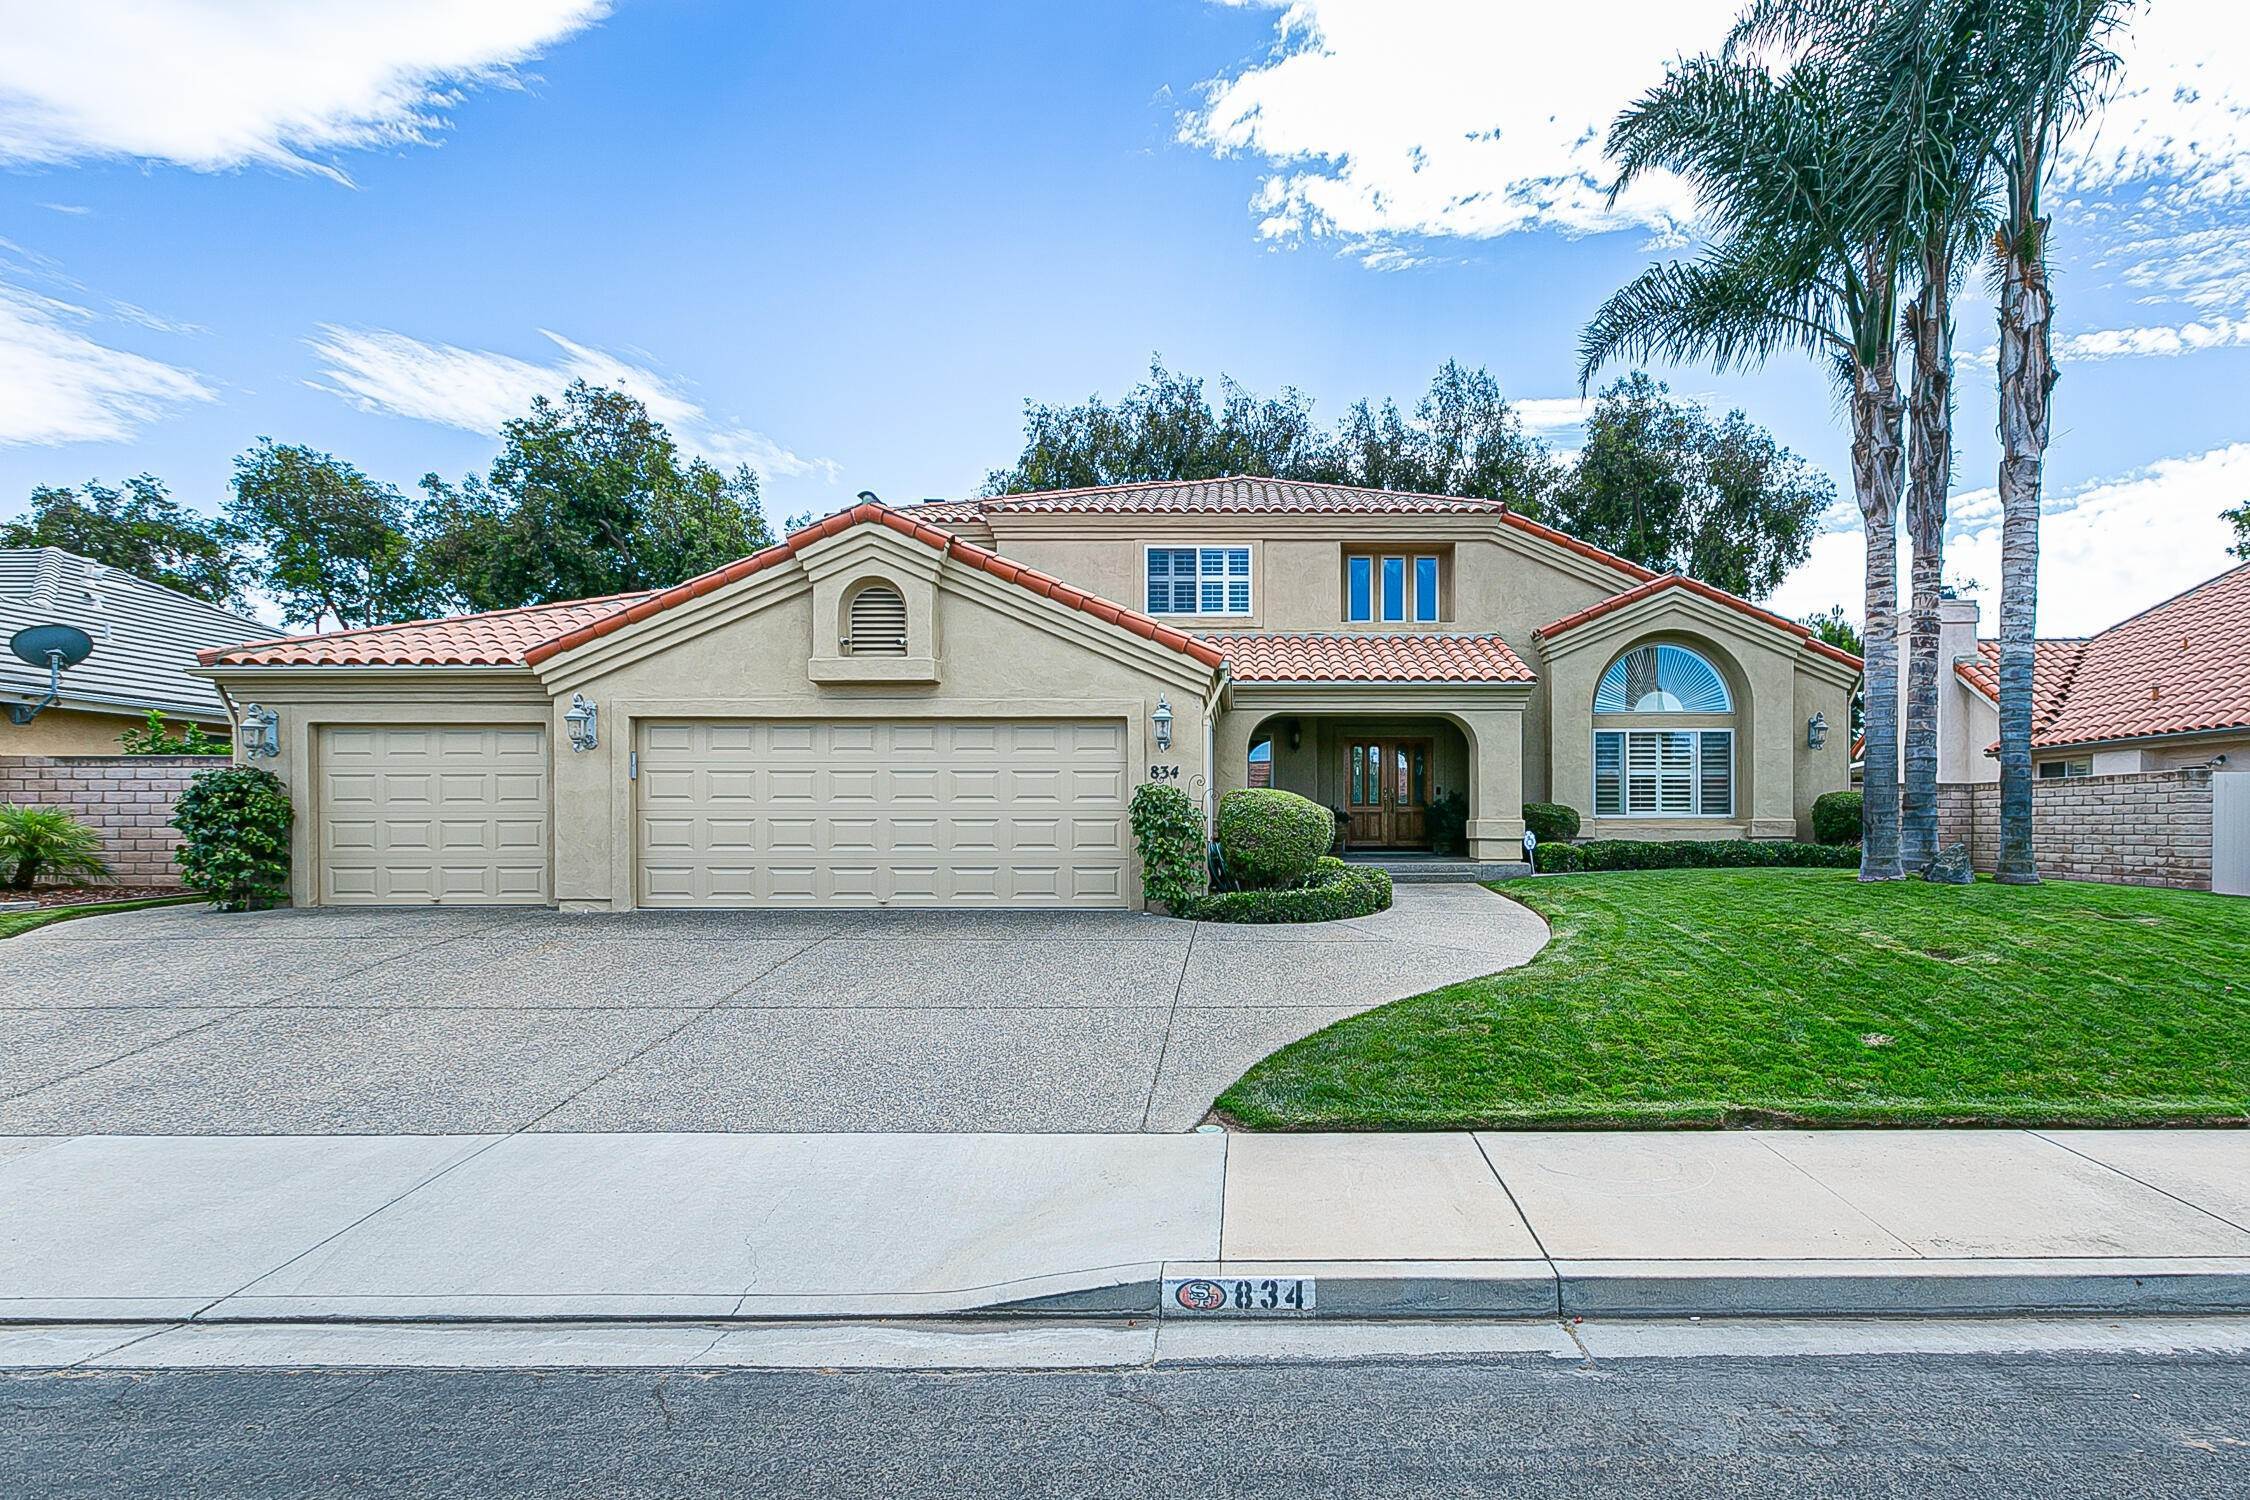 Estate for Sale at 834 Fairway Vista Drive Santa Maria, California 93455 United States